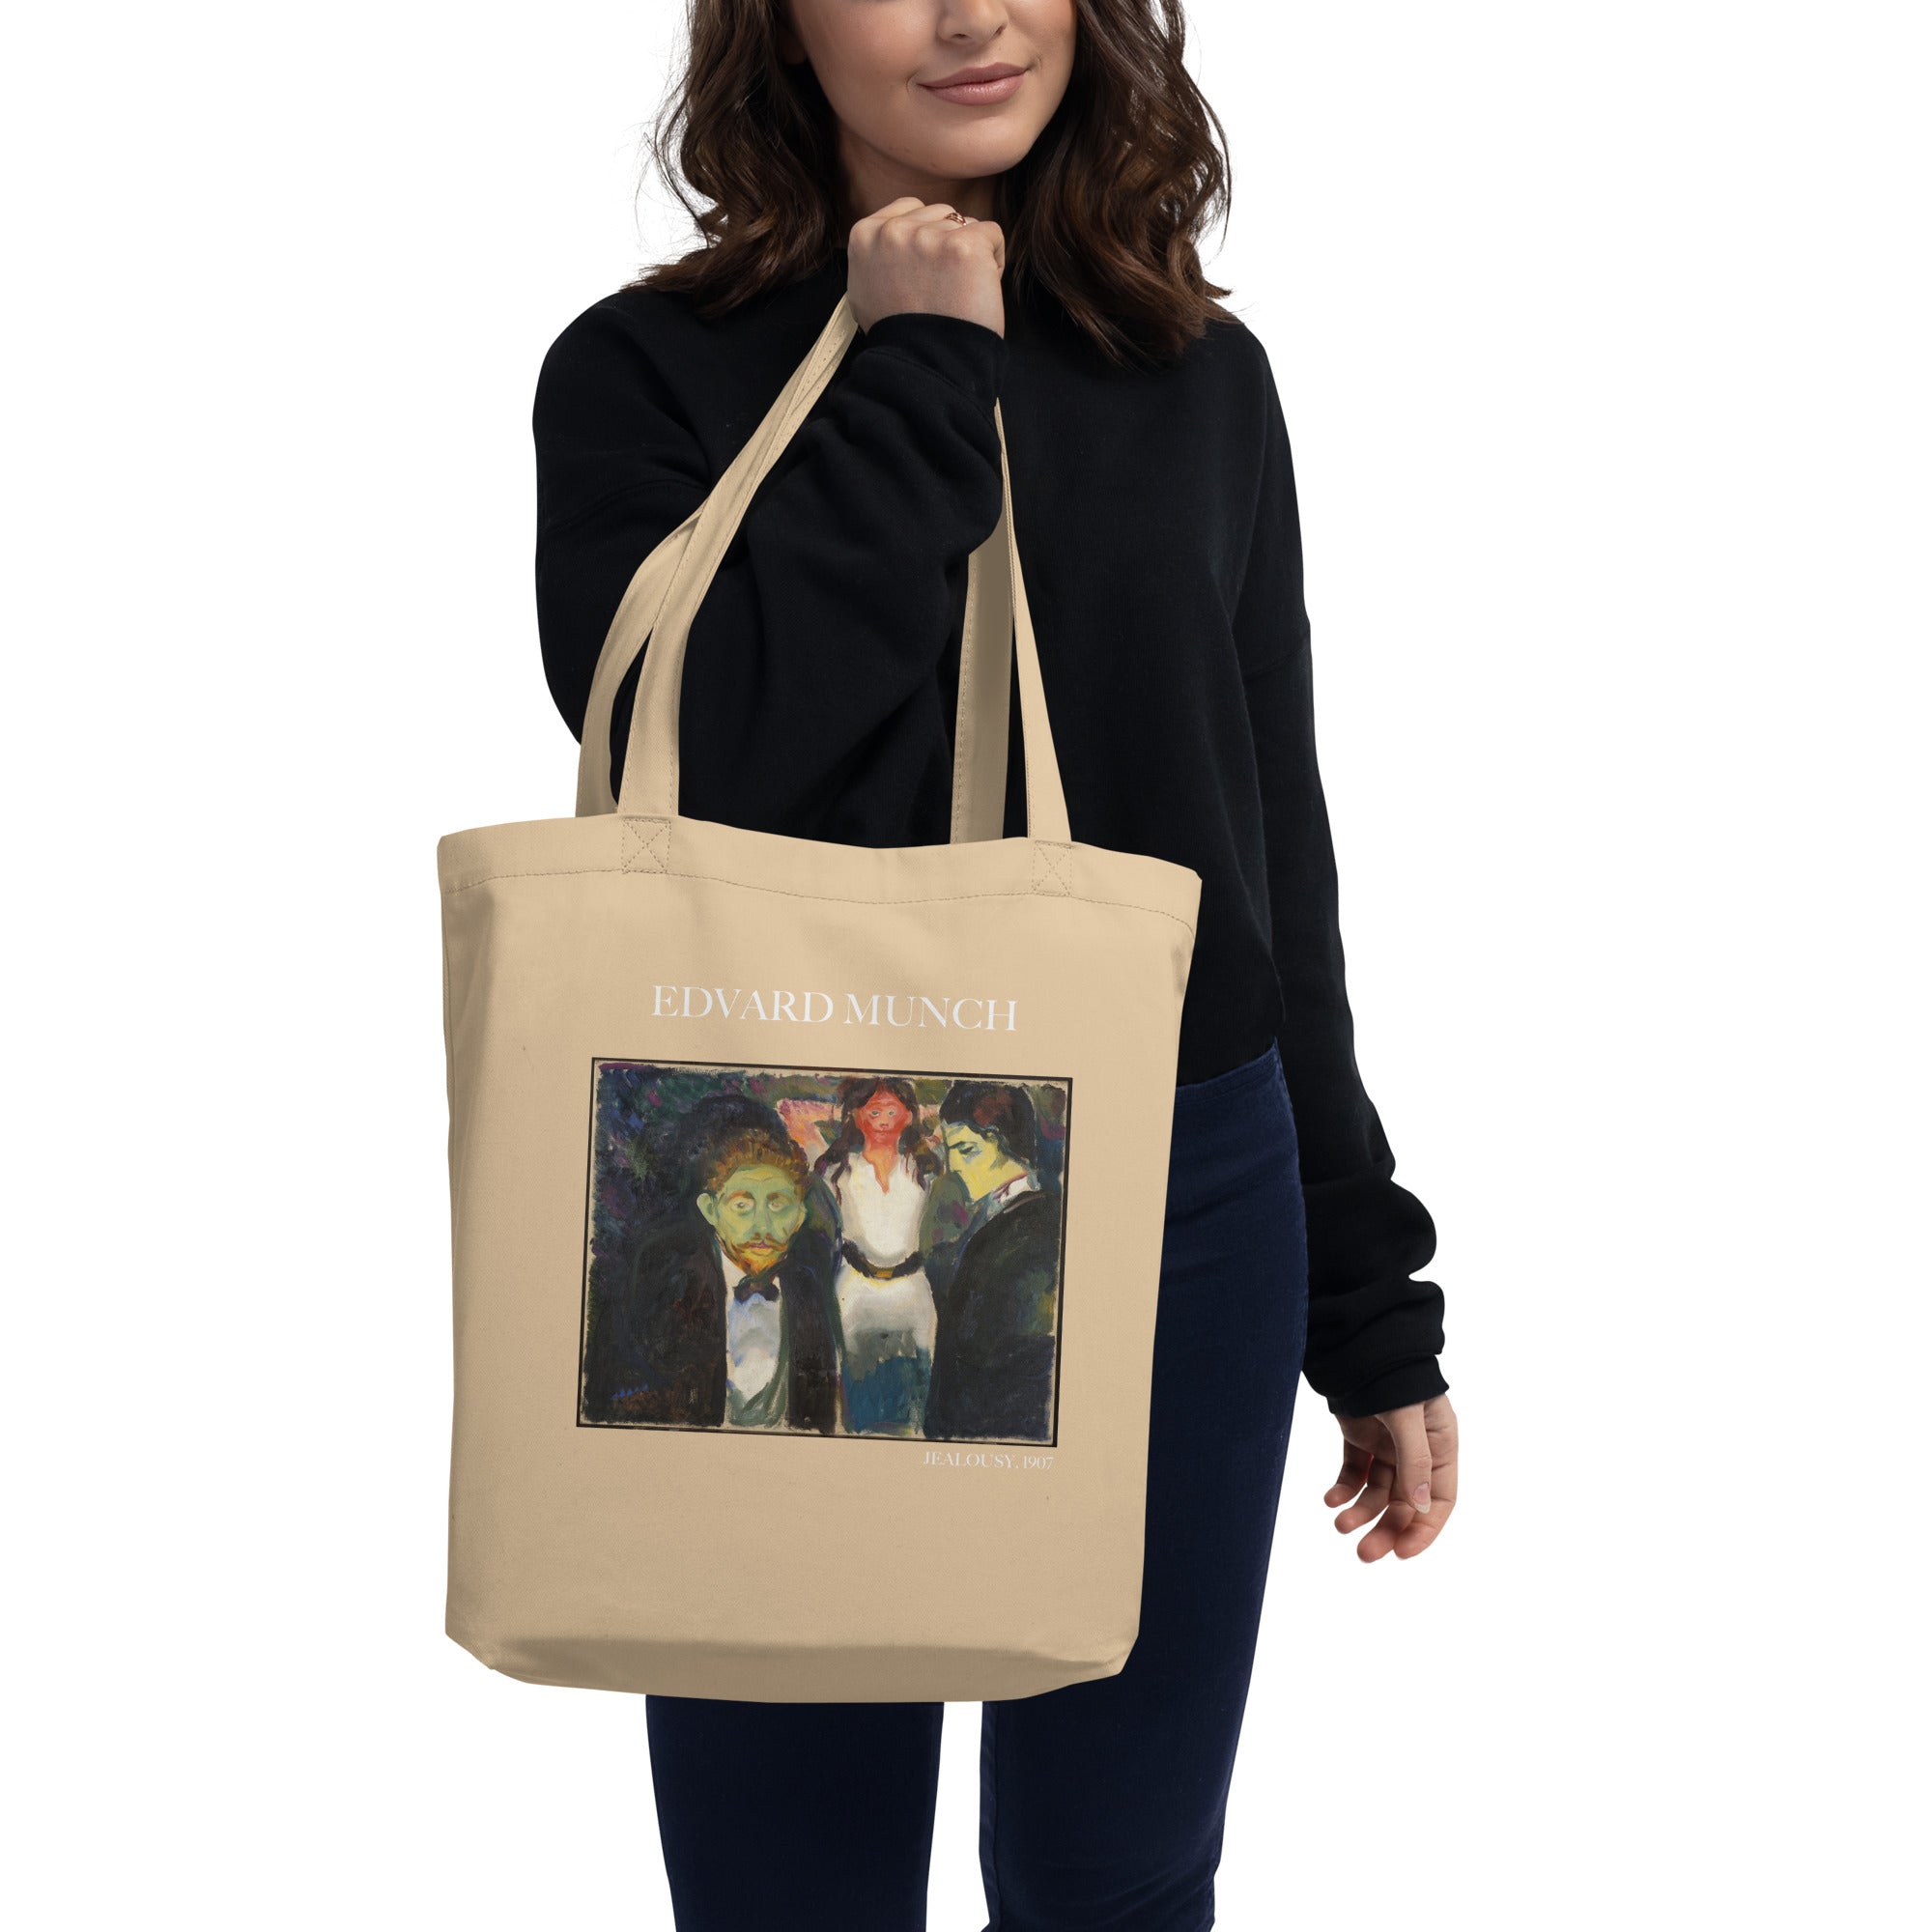 Edvard Munch 'Vampire' Famous Painting Totebag | Eco Friendly Art Tote Bag